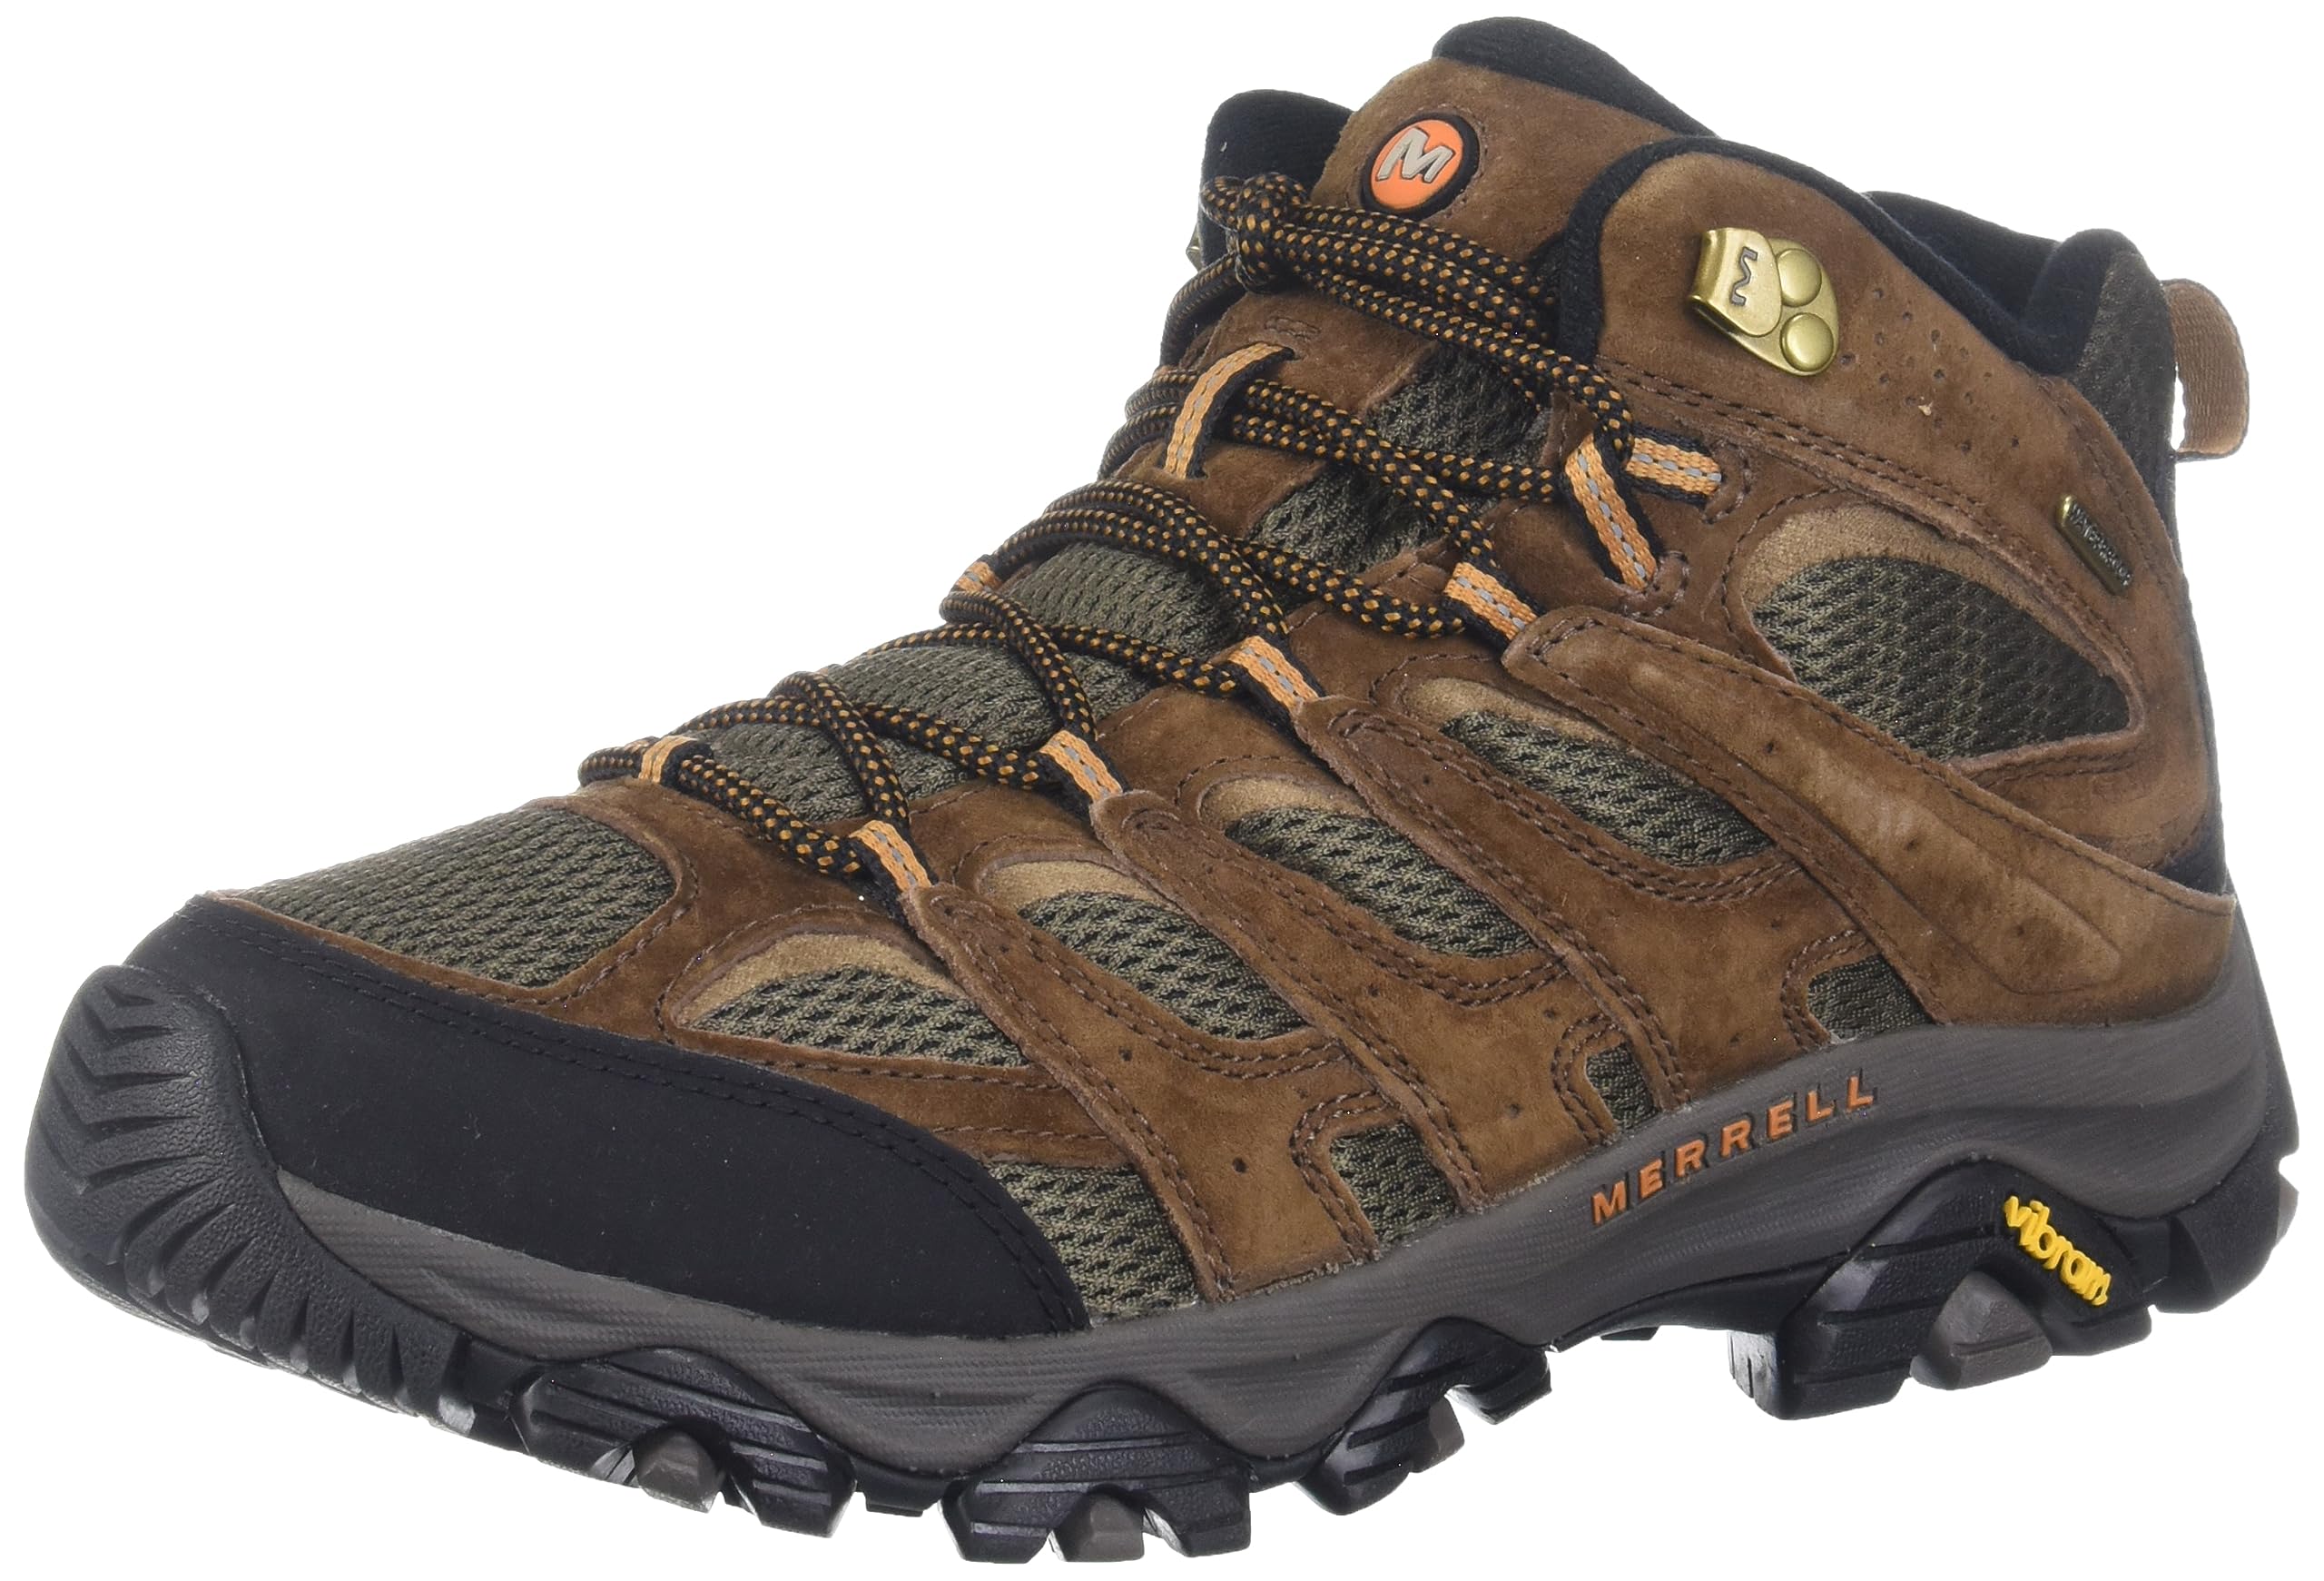 Merrell Men's Moab 3 Mid Waterproof Hiking Boot - $70